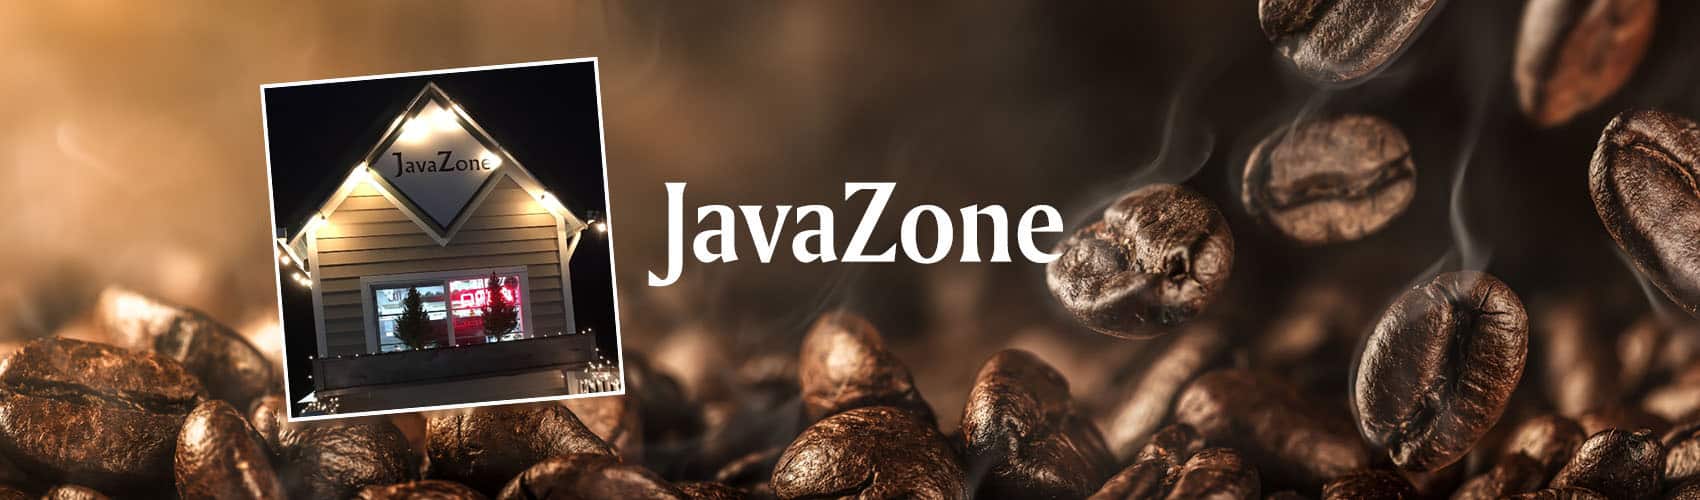 JavaZone coffee stand